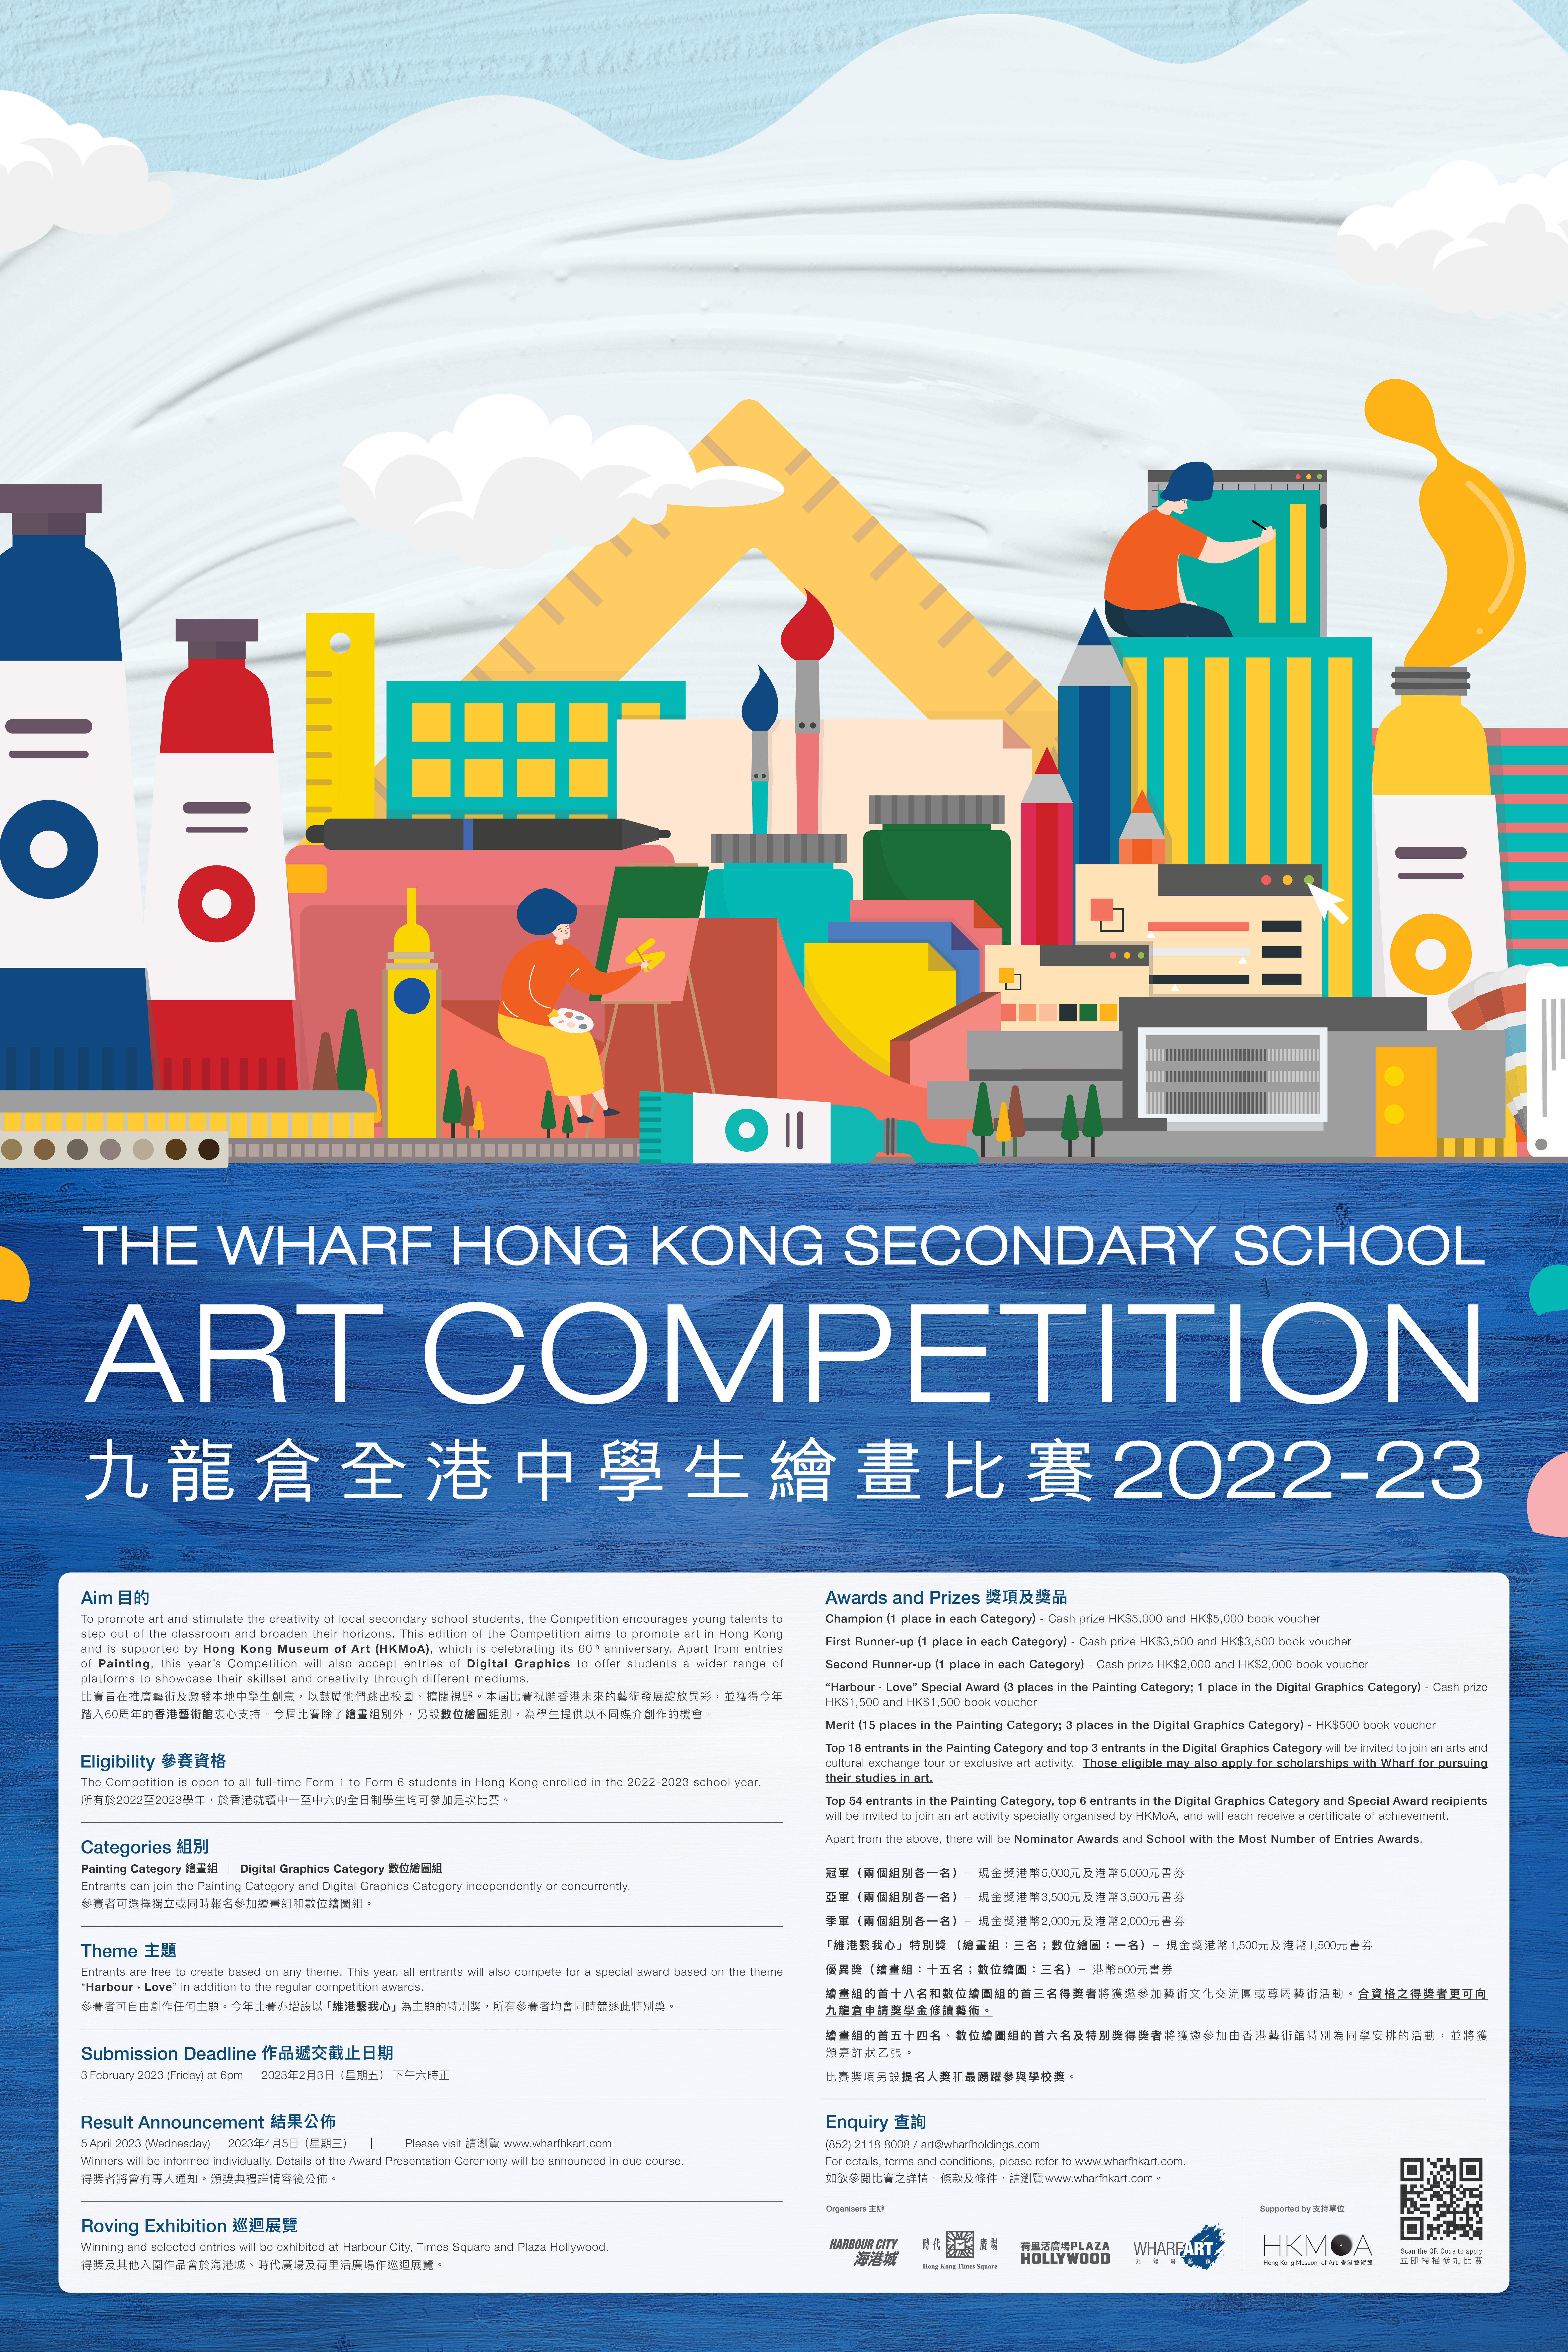 The Wharf Hong Kong Secondary School Art Competotion 2022-23